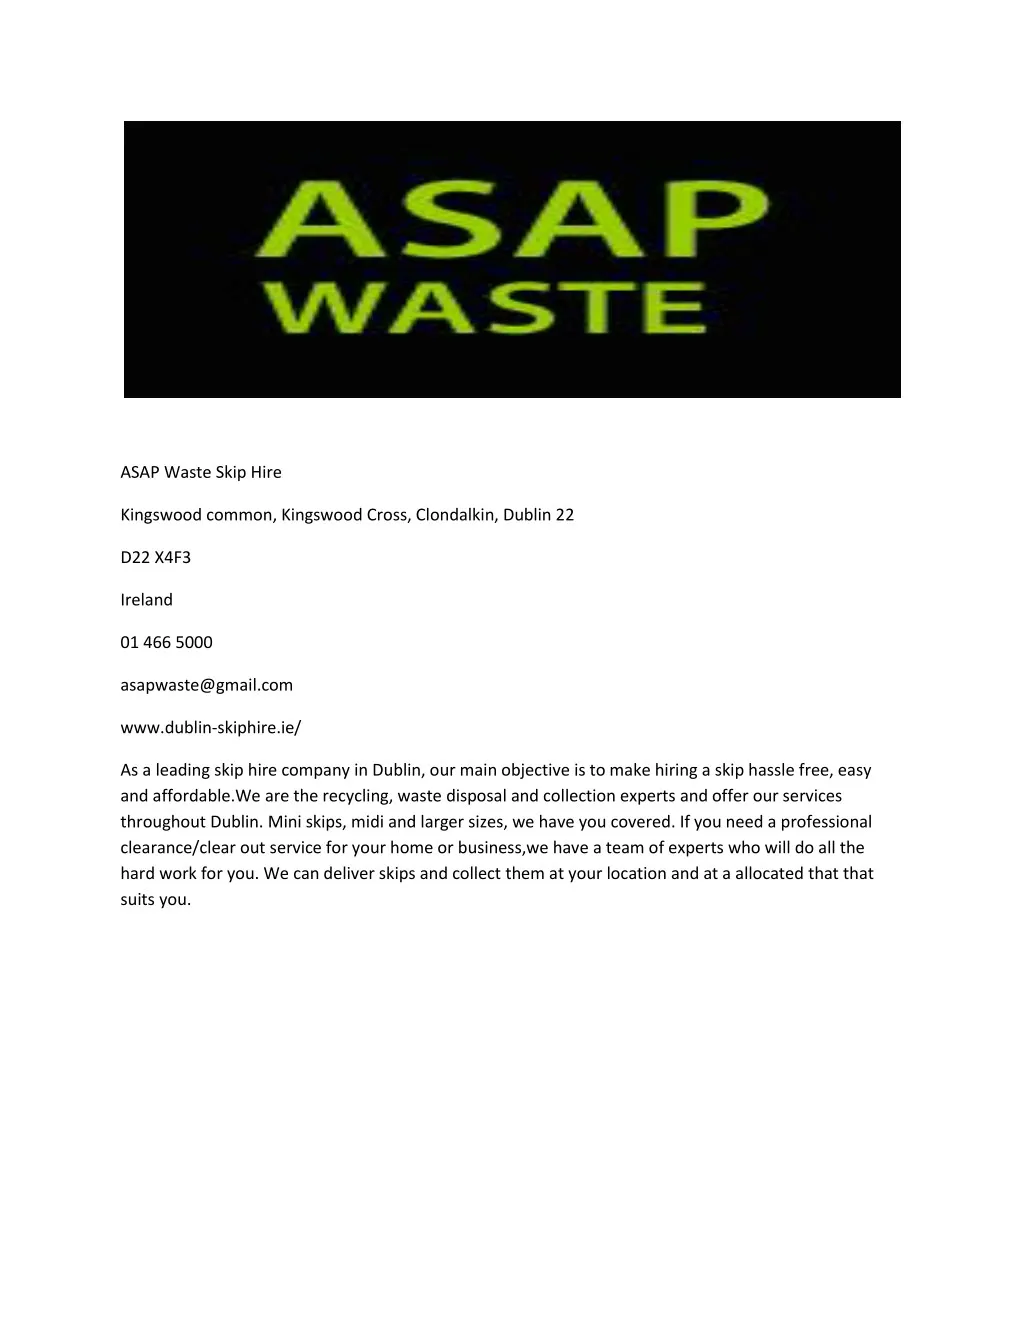 asap waste skip hire